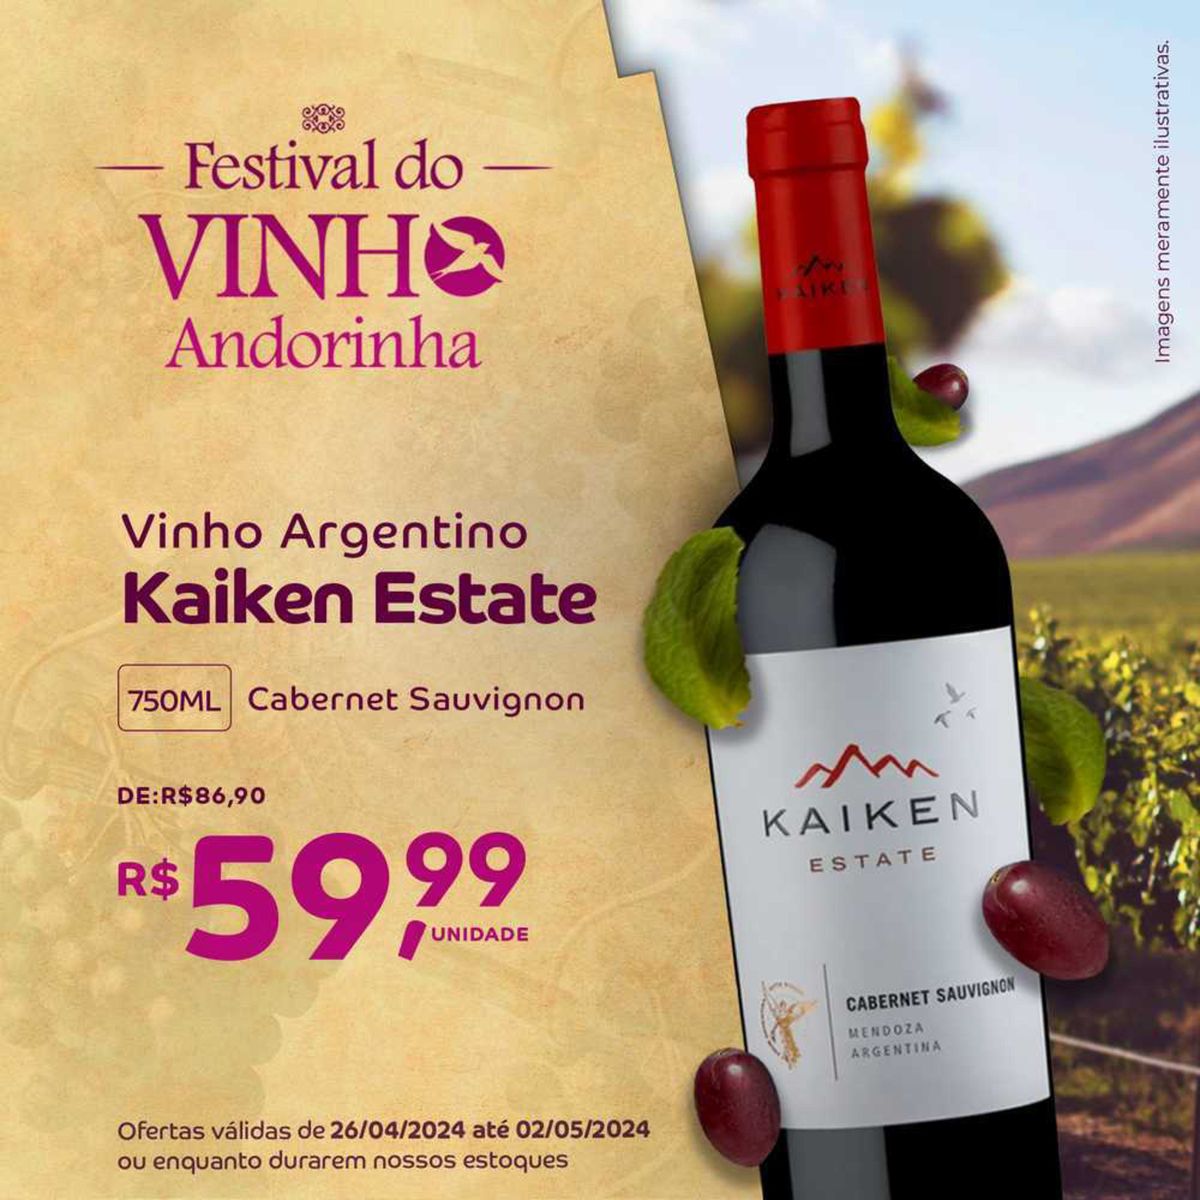 Festival do Vinho - Vinho Argentino Kaiken Estate 750ML Cabernet Sauvignon